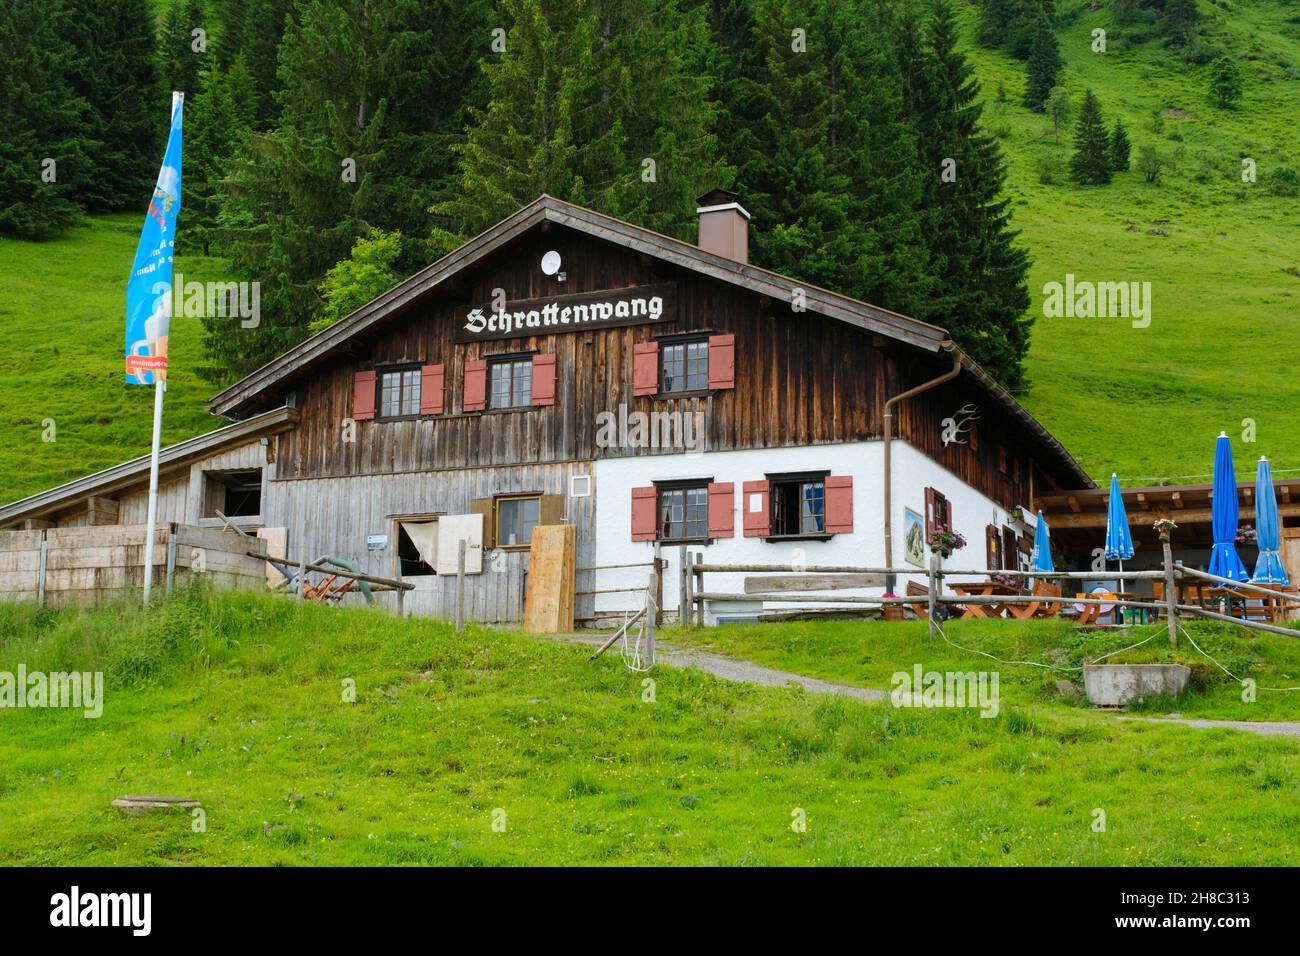 Schrattenwang Alp, Söllereck, Oberstdorf, Baviera, Germania, Europa Foto Stock